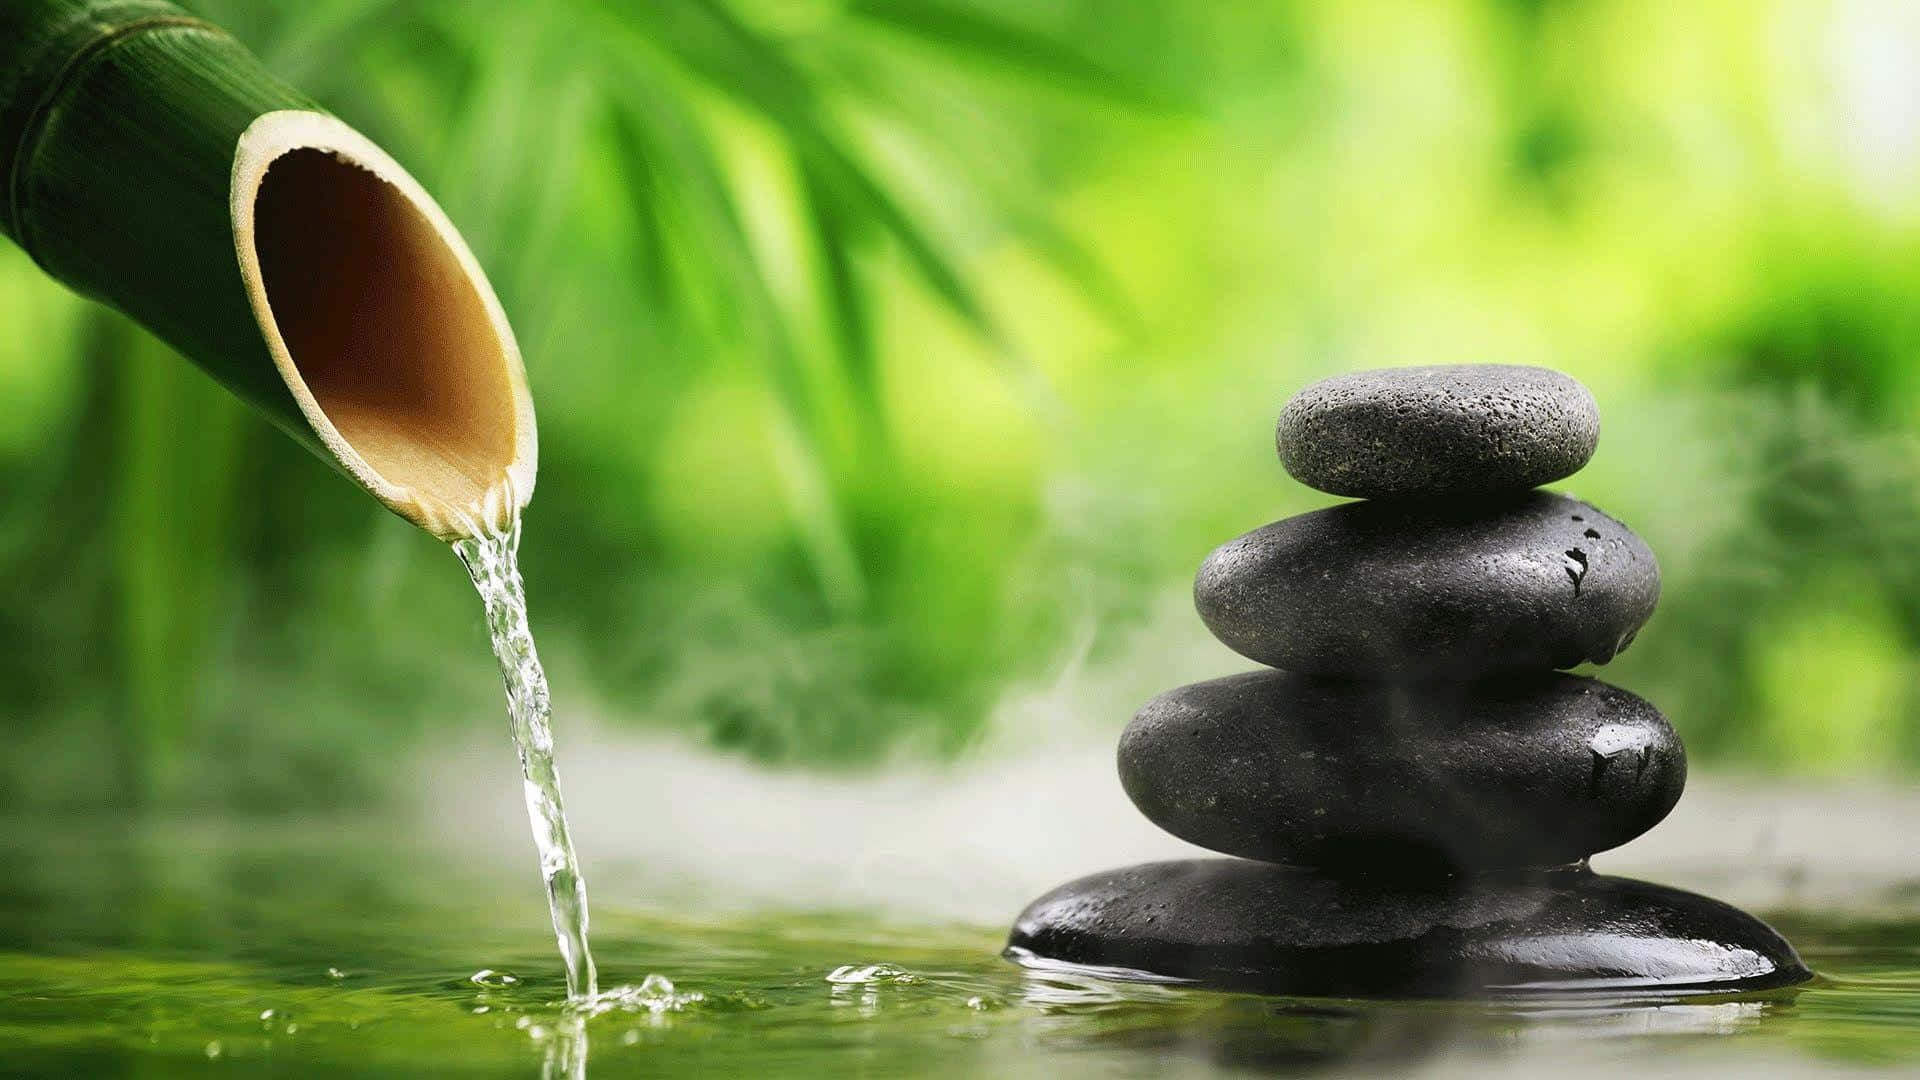 Zen Spa Bamboo Water Flowand Stones.jpg Wallpaper